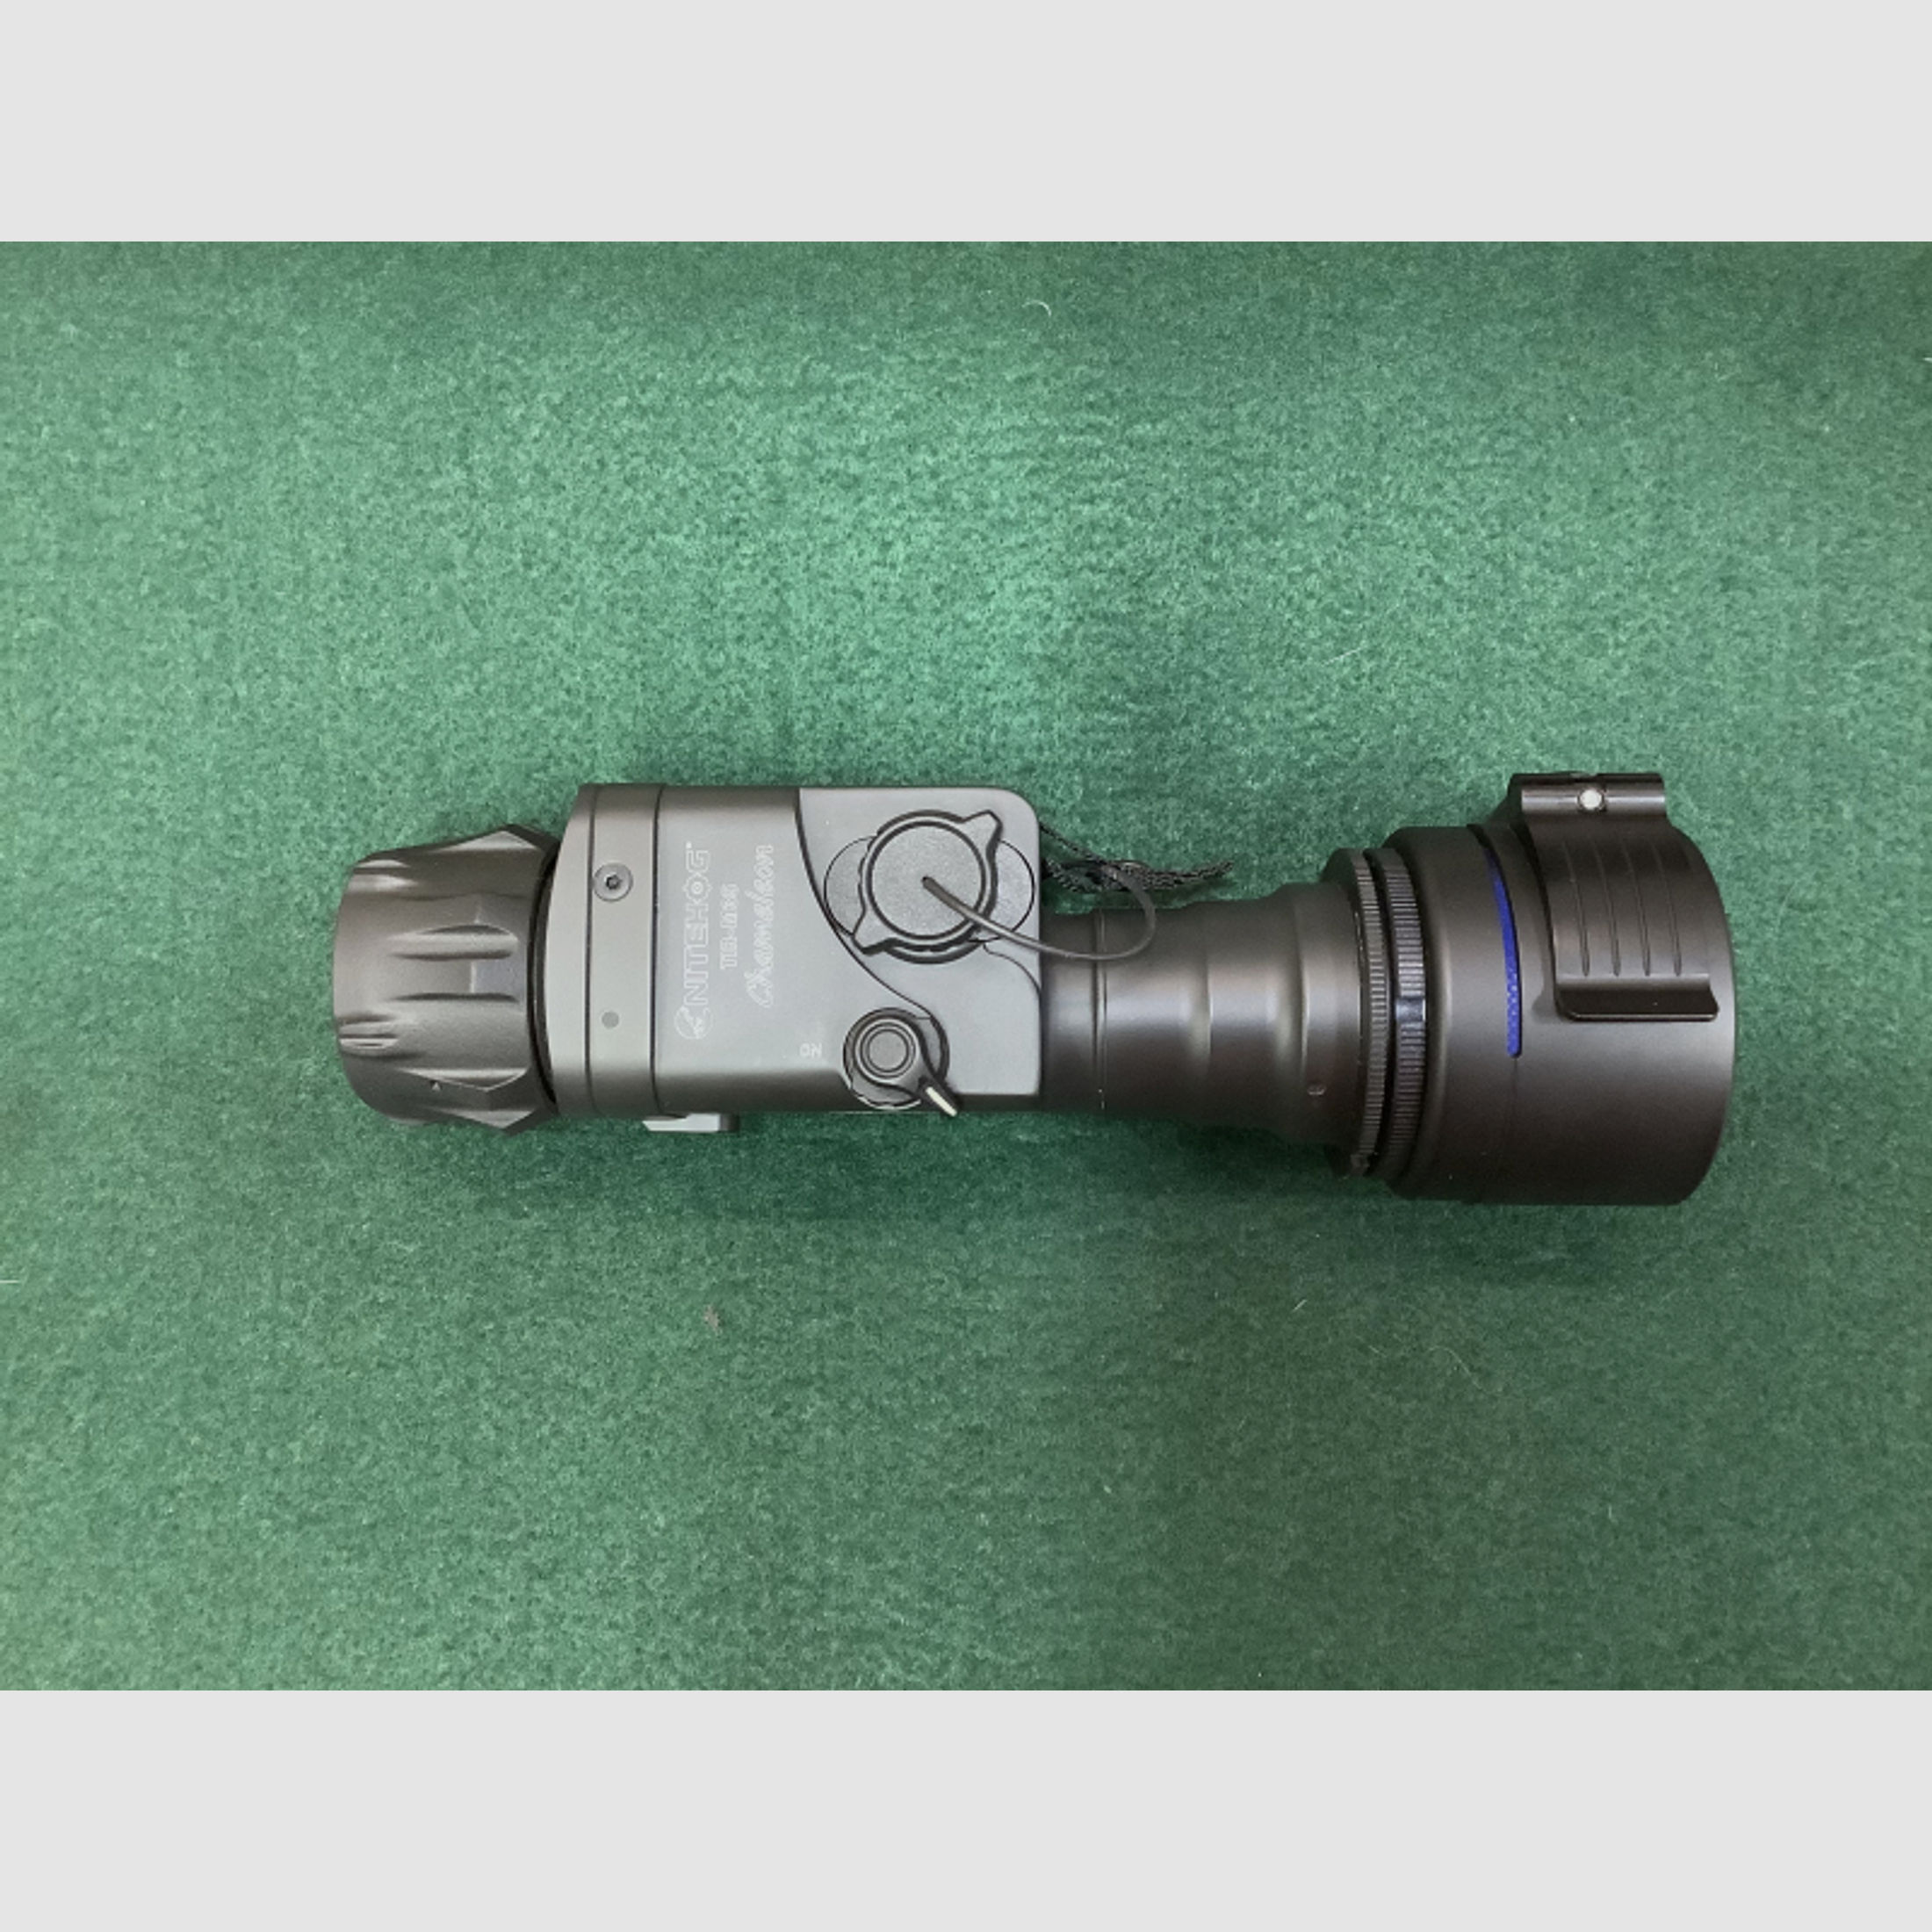 Wärmebildkamera Nitehog Chameleon TIR M35 mit 62er Smartclip Adapter Gebraucht